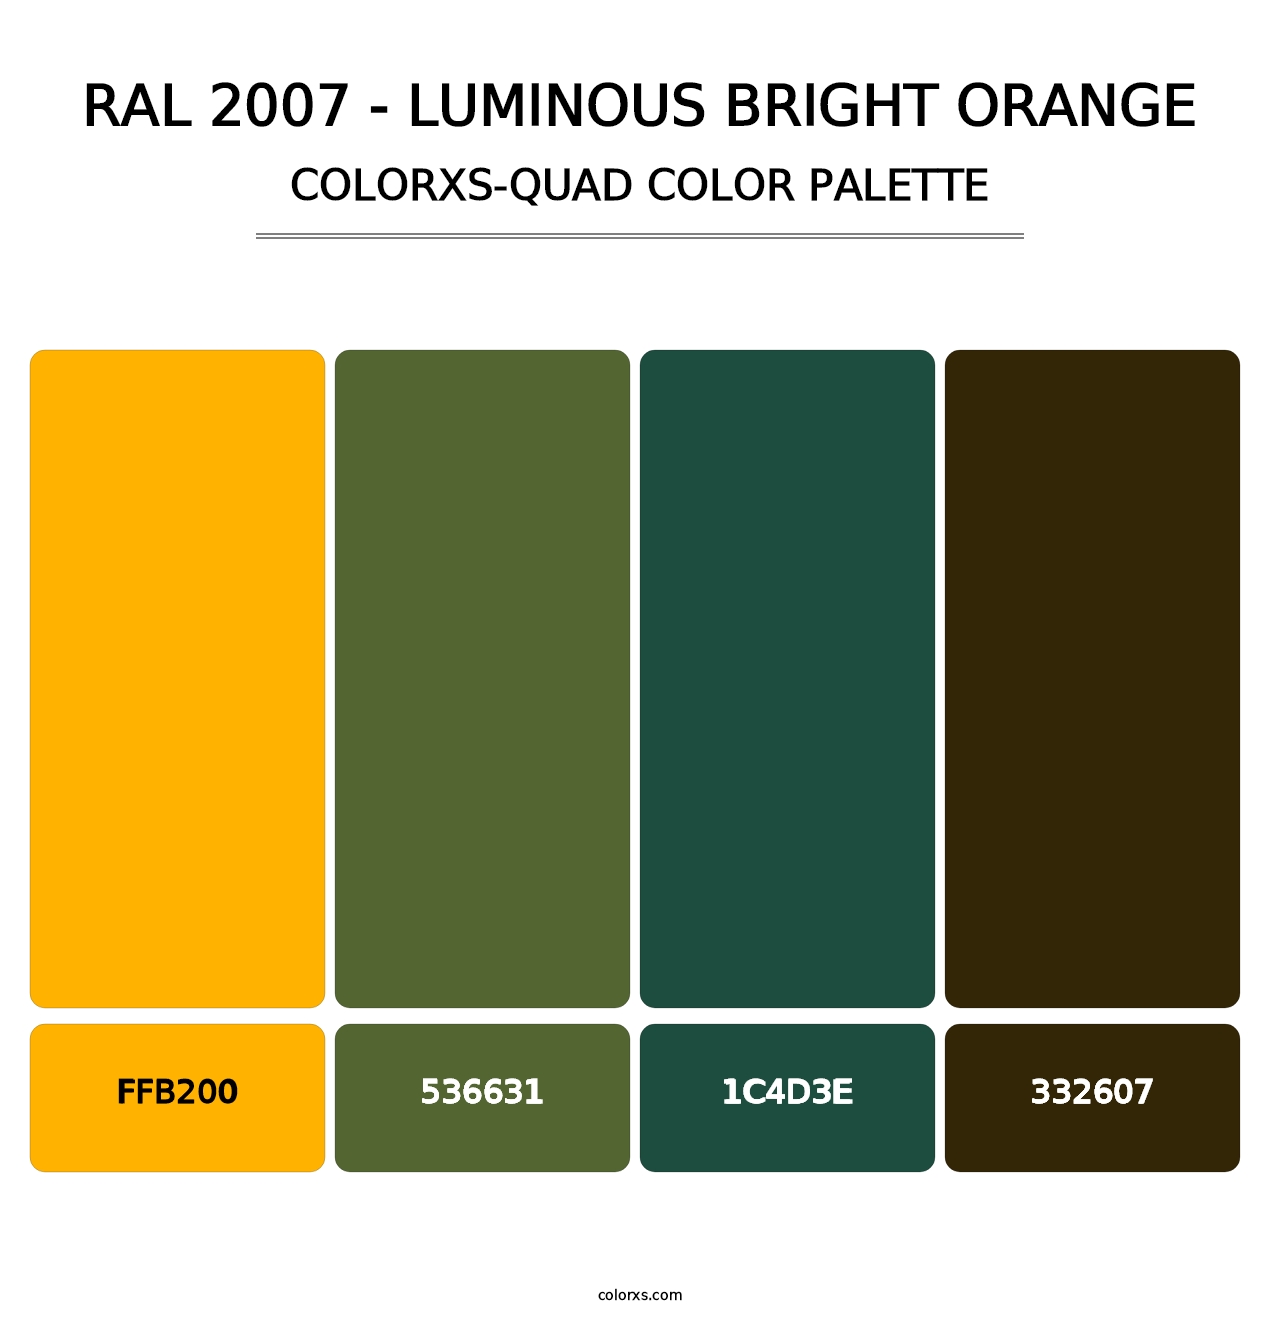 RAL 2007 - Luminous Bright Orange - Colorxs Quad Palette